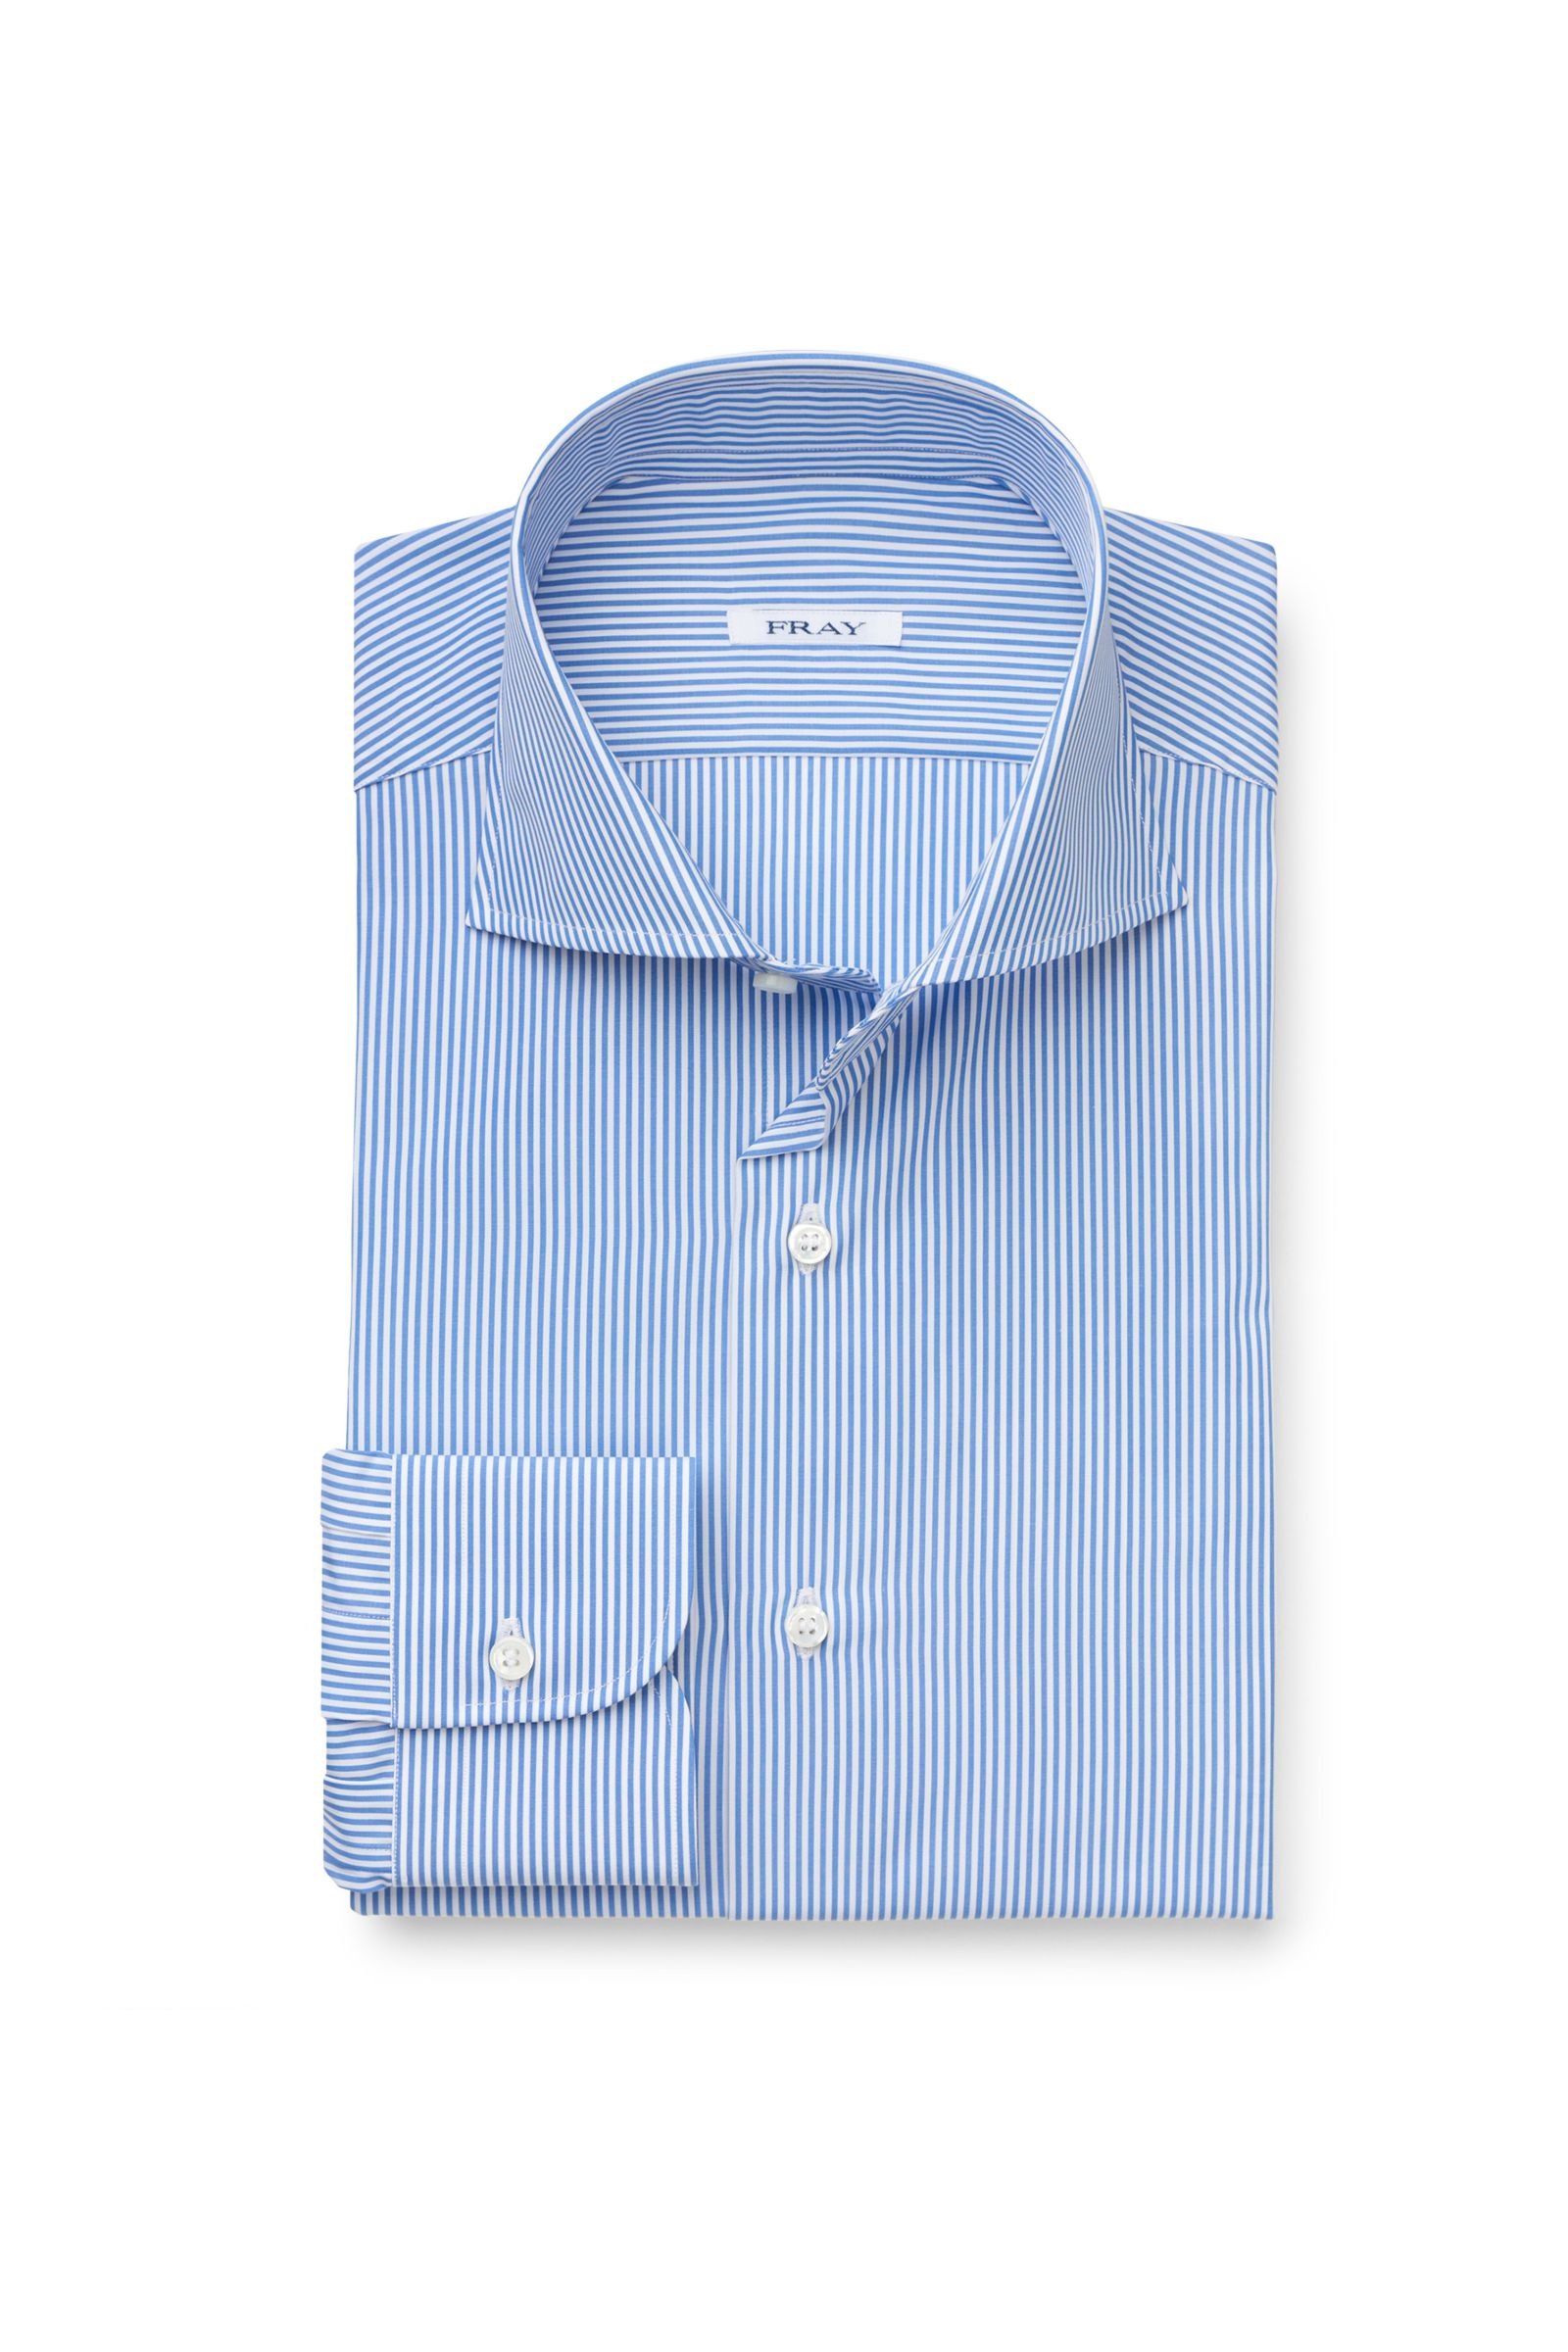 Business shirt 'Fausto' shark collar blue striped